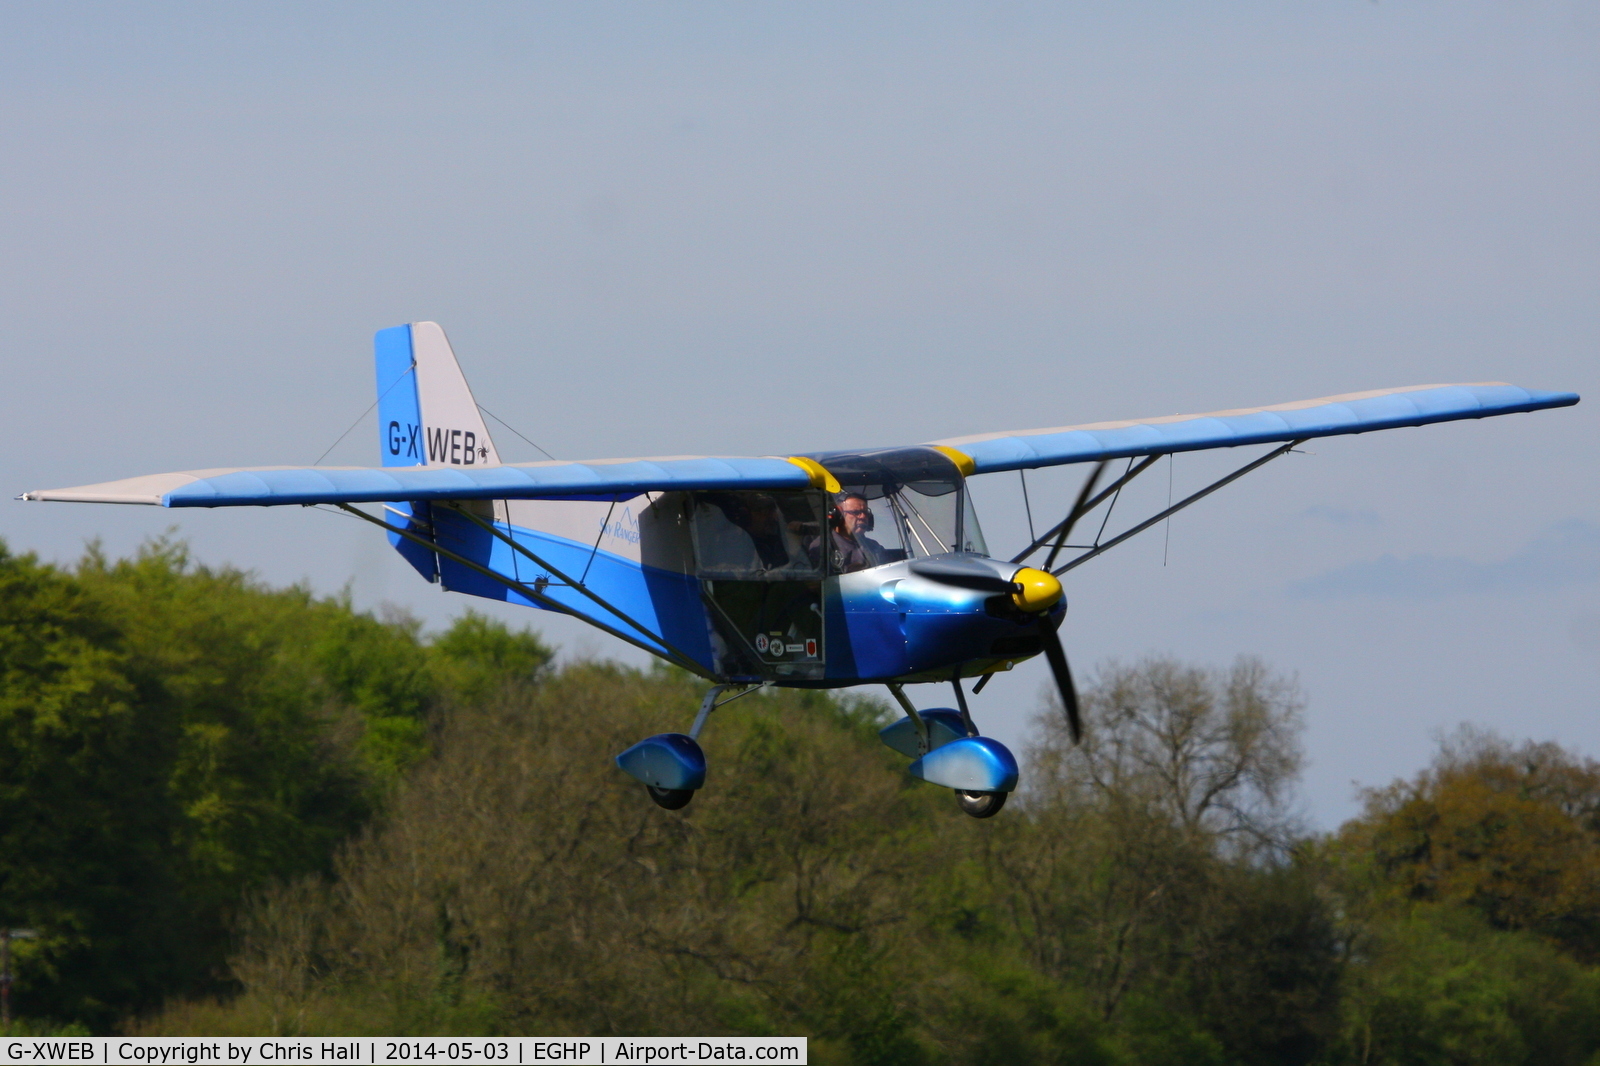 G-XWEB, 2005 Skyranger 912(2) C/N BMAA/HB/443, at the 2014 Microlight Trade Fair, Popham